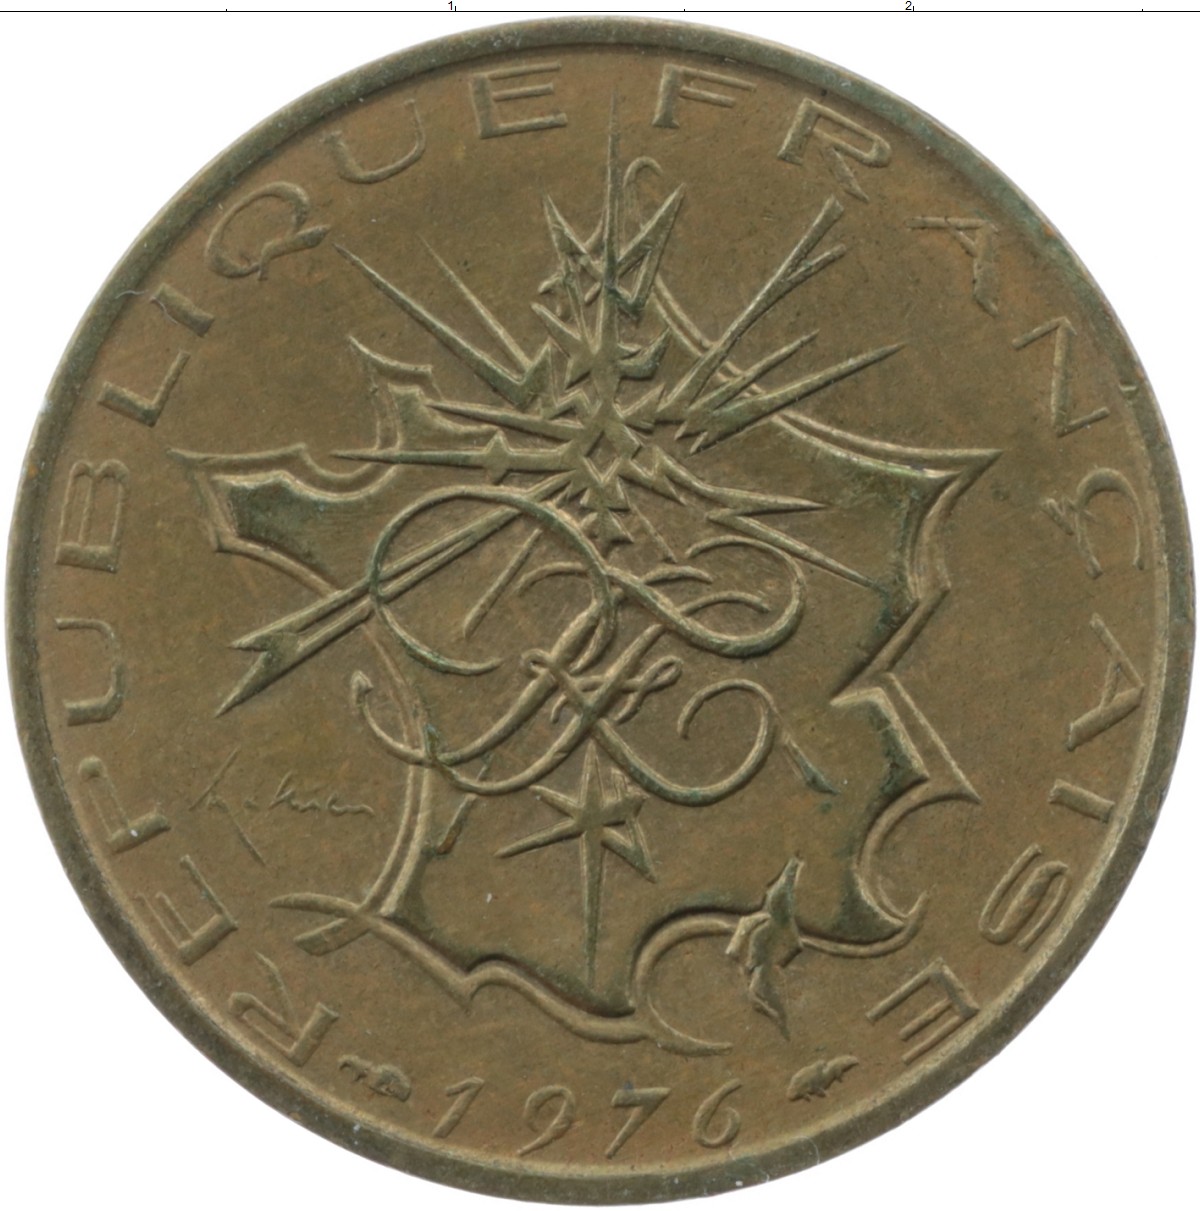 French 10. Монеты Франции 1976. Франция 10 франков 1979. Монета 10 франков. Французские монеты никель.